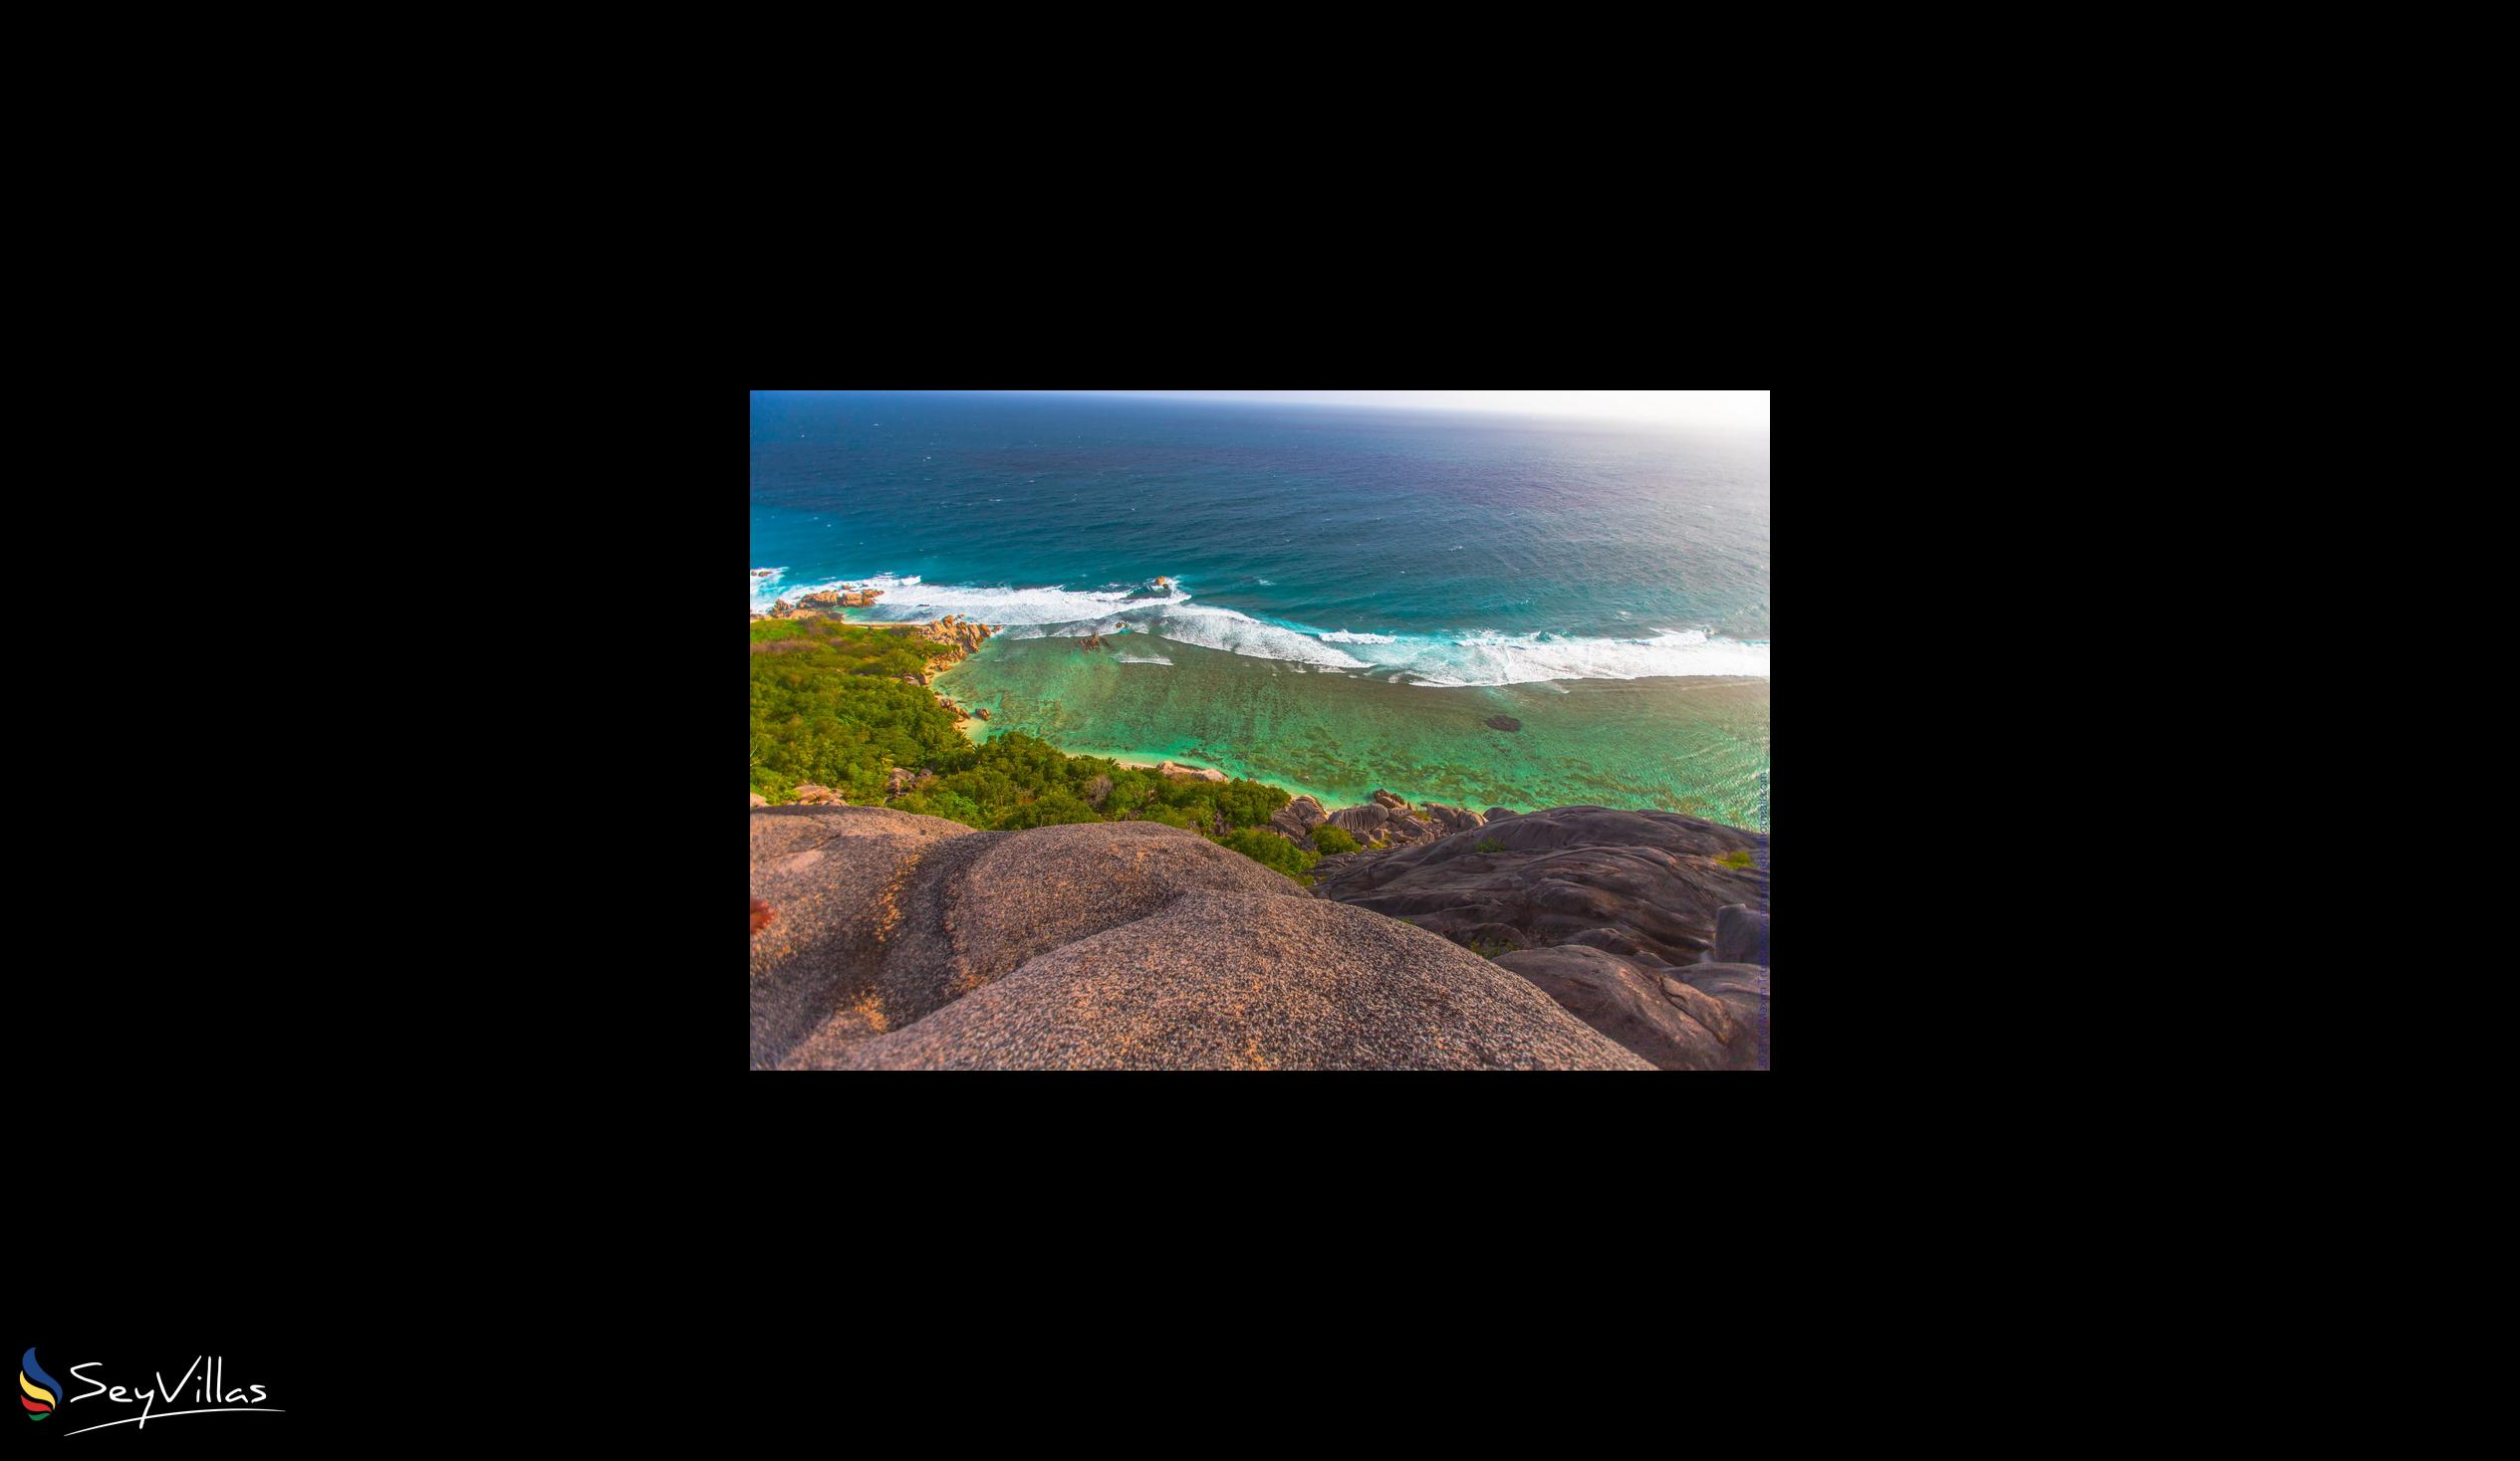 Photo 31: Ambiance Villa - Location - La Digue (Seychelles)